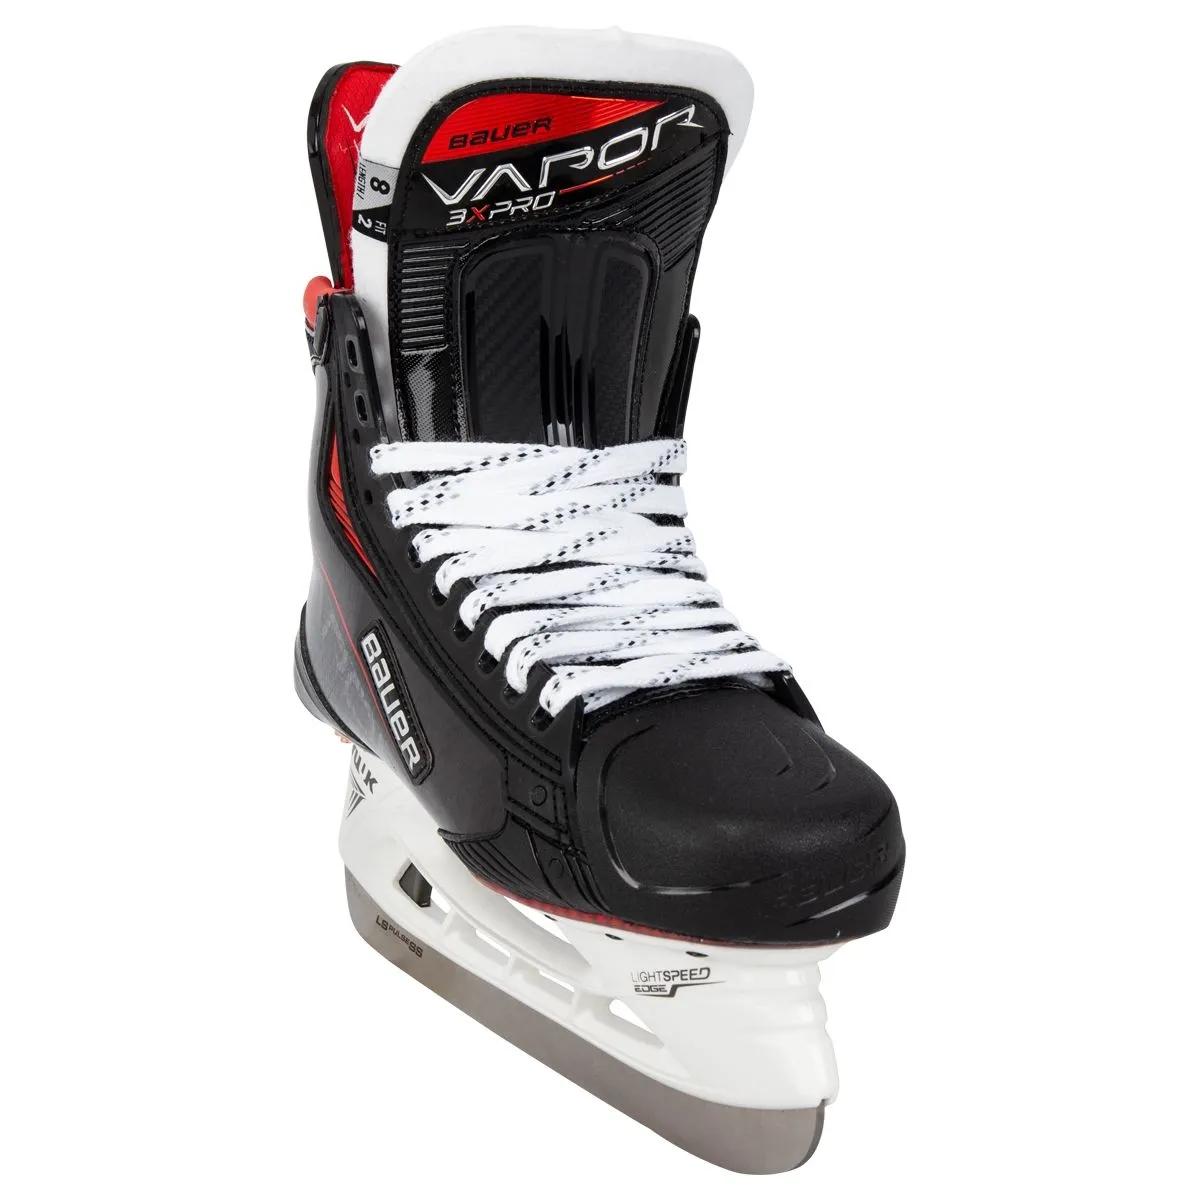 Bauer Vapor 3X Pro Sr. Hockey Skatesproduct zoom image #2